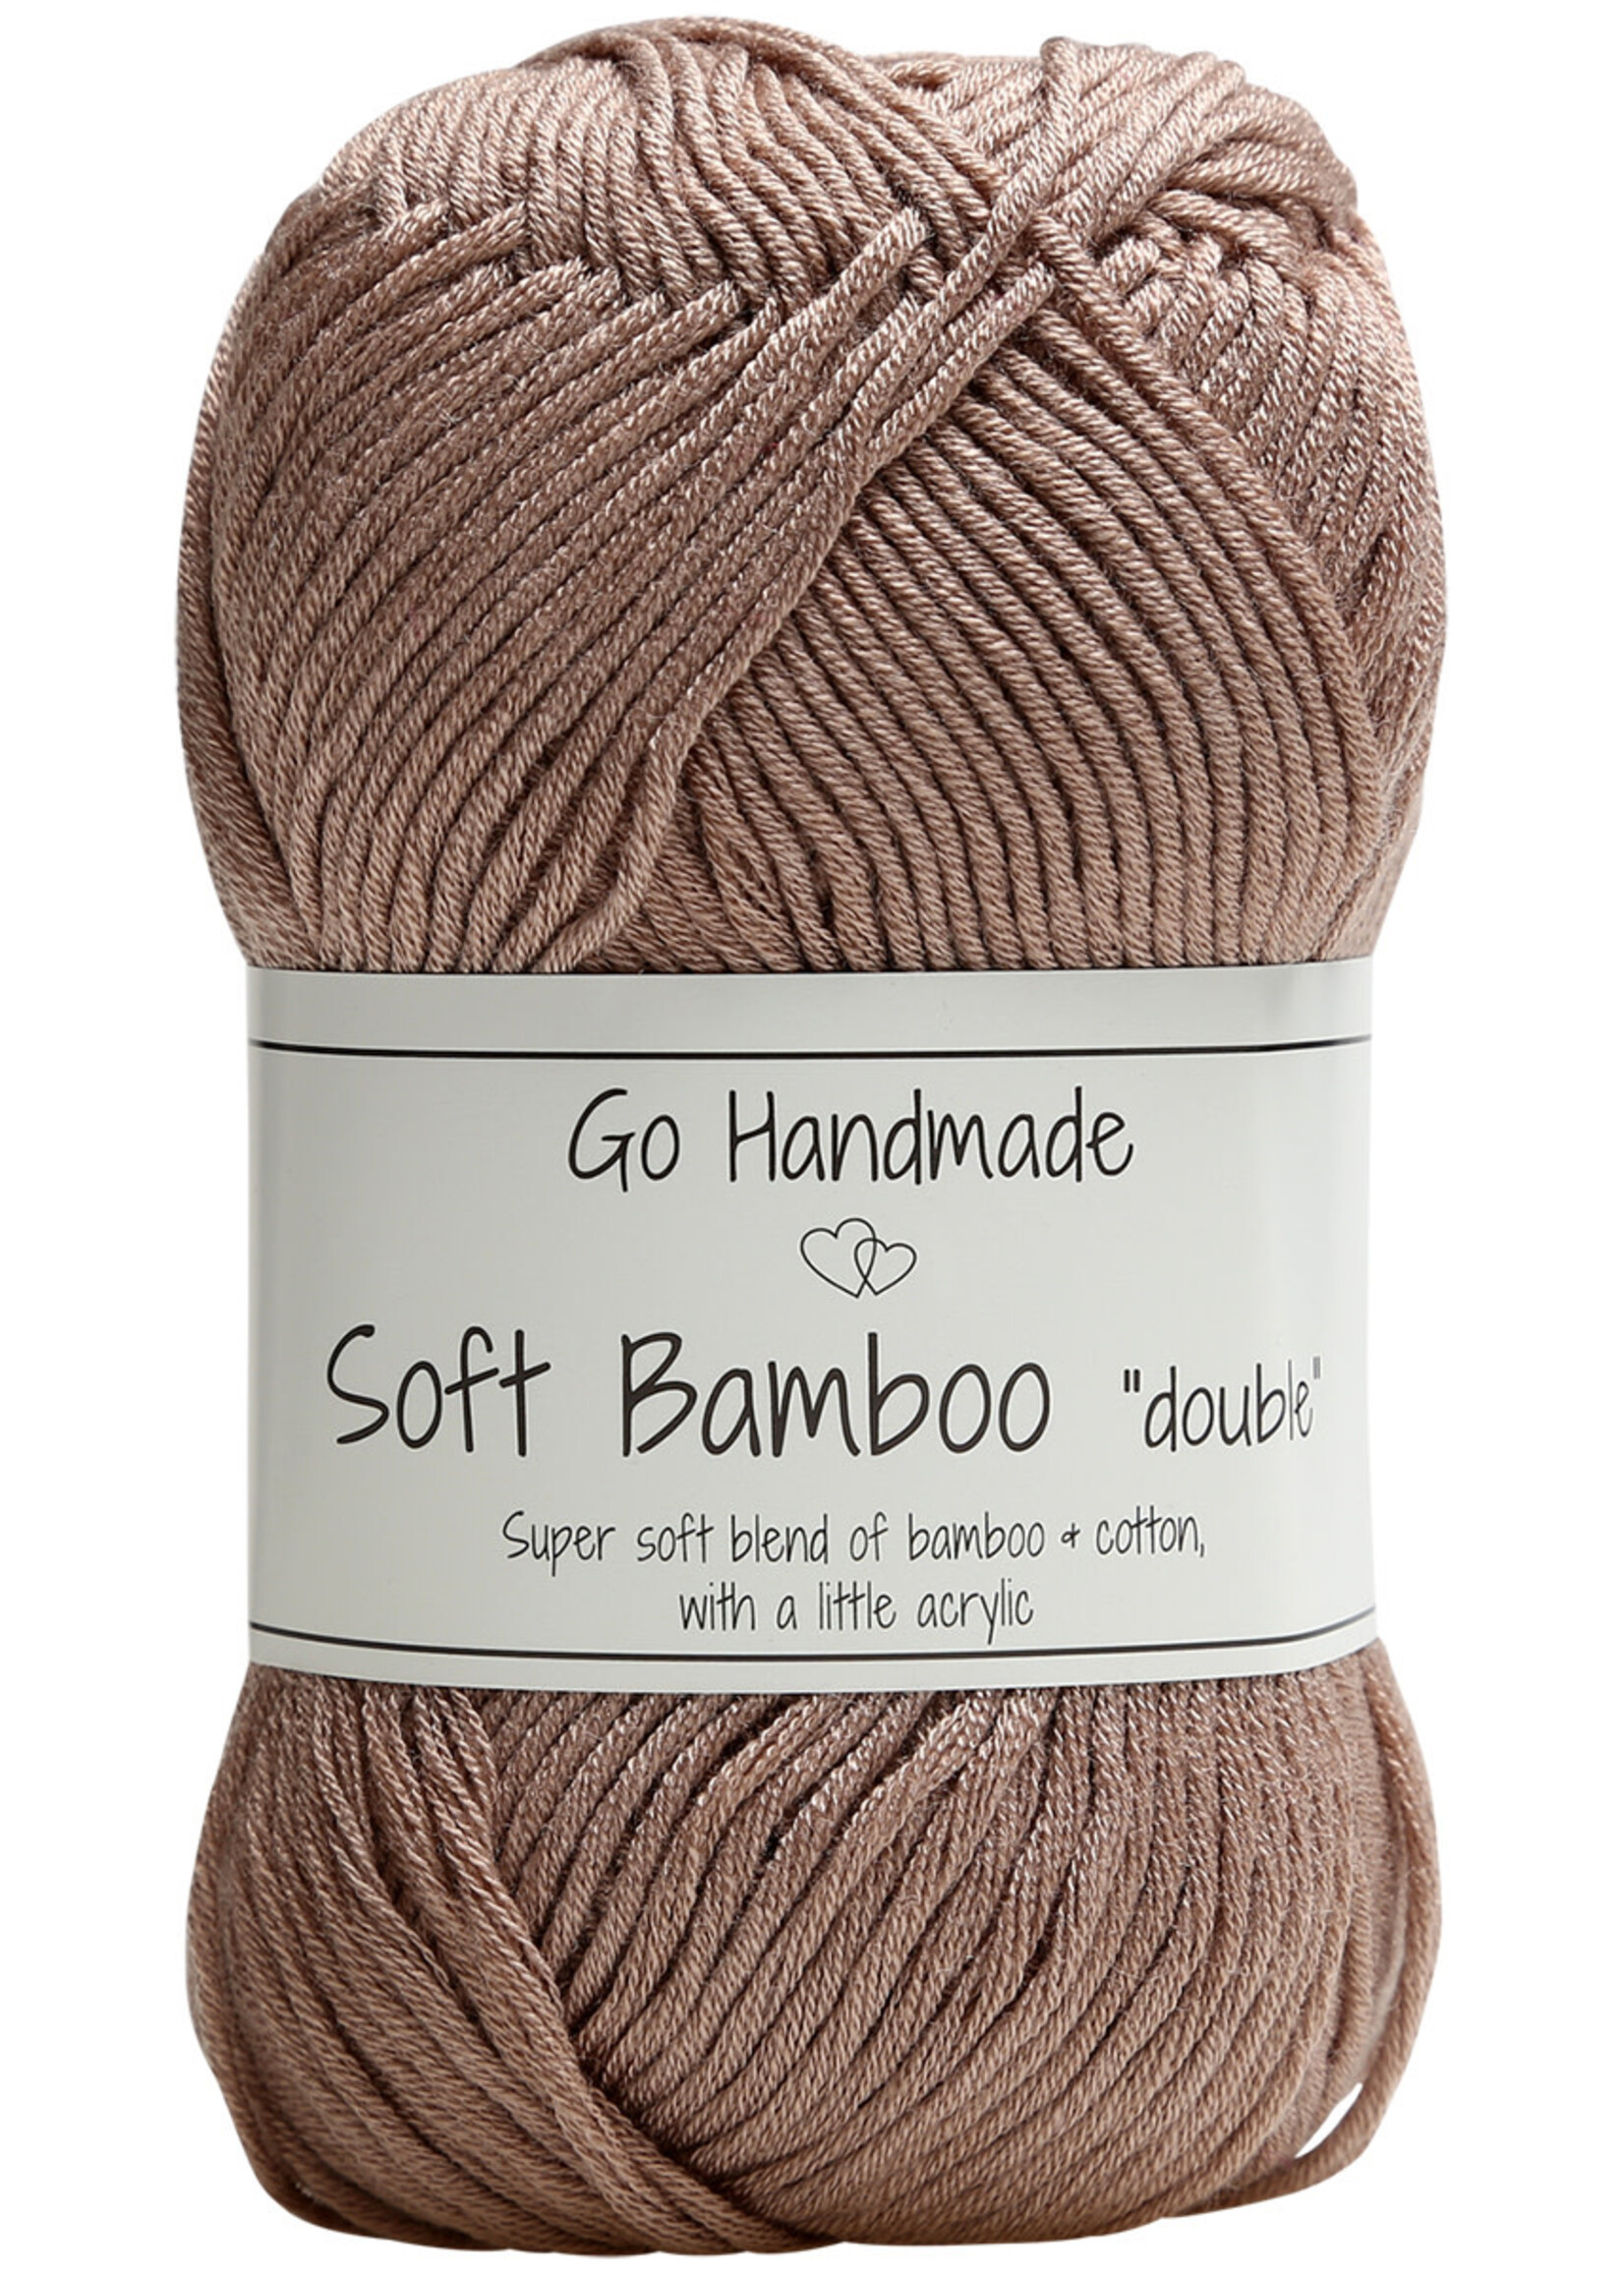 GoHandmade Soft Bamboo "double" -nude beige